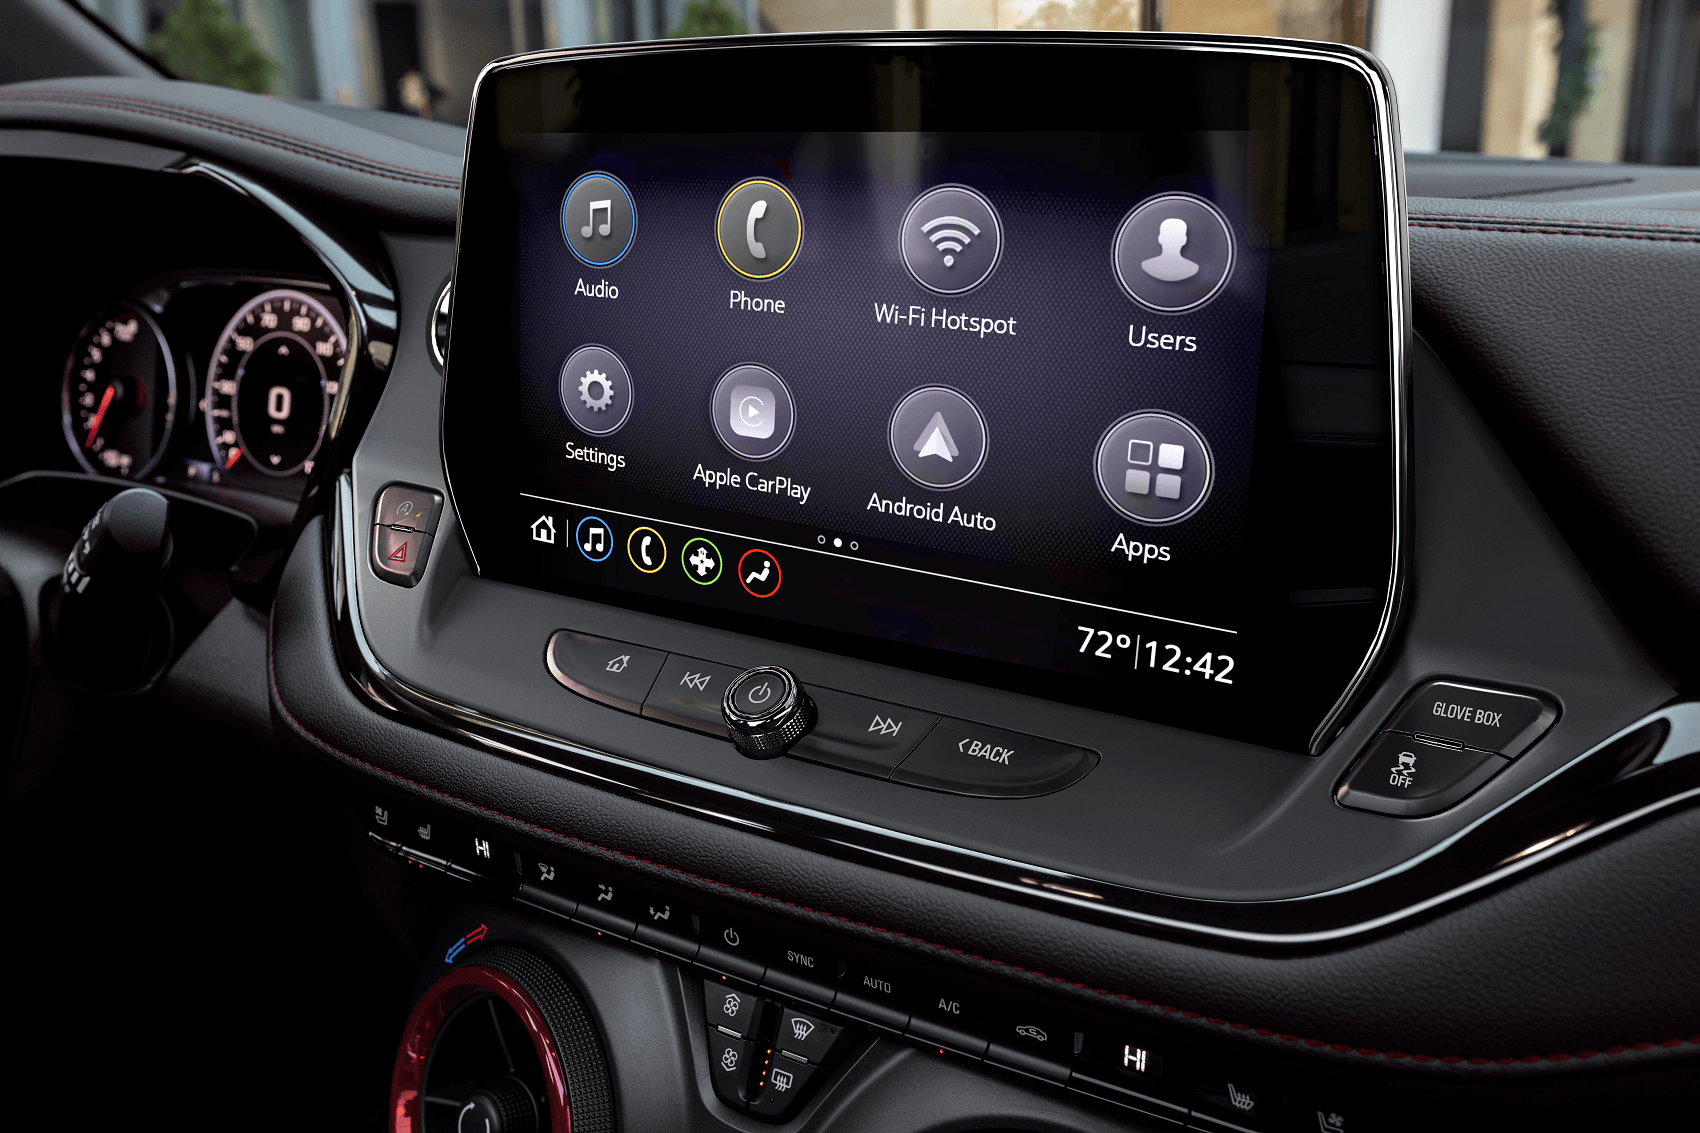 chevy blazer interior features touchscreen dashboard technology